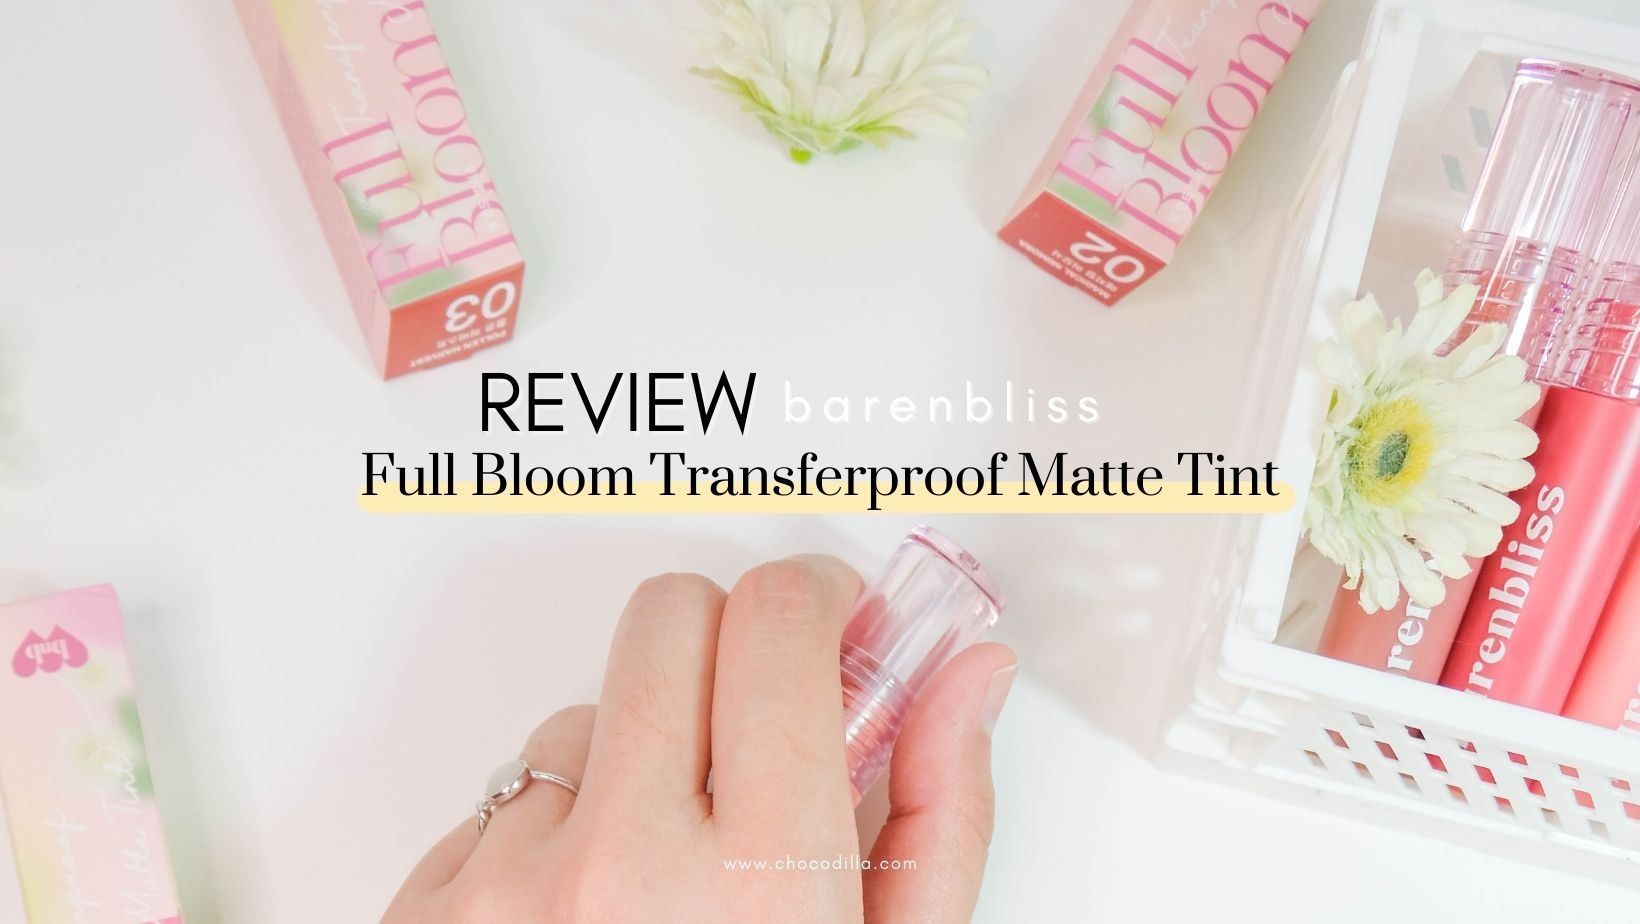 Review barenbliss Full Bloom Transferproof Matte Tint